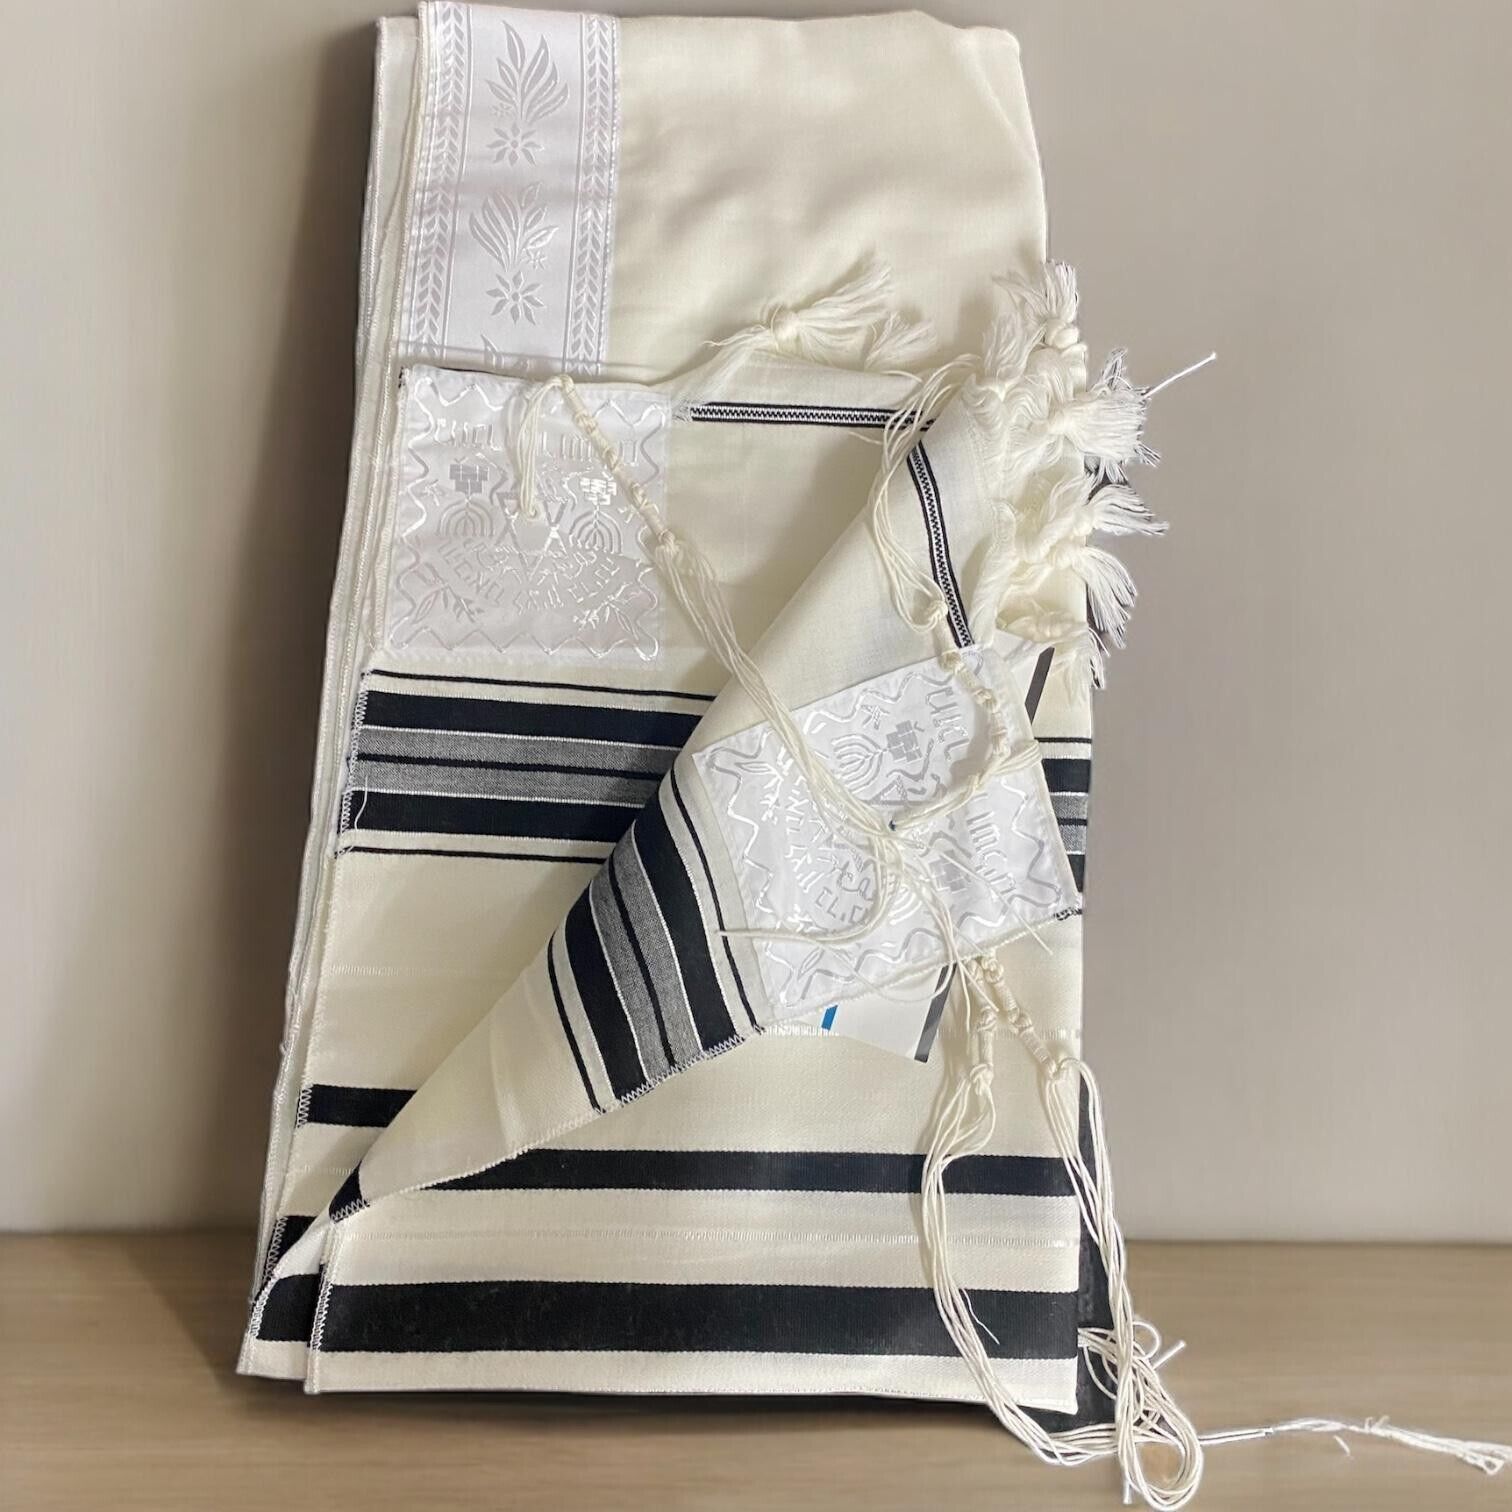 SALE Kosher black &White Tallit Talis Prayer Shawl 100% Wool size Small 55 51x72